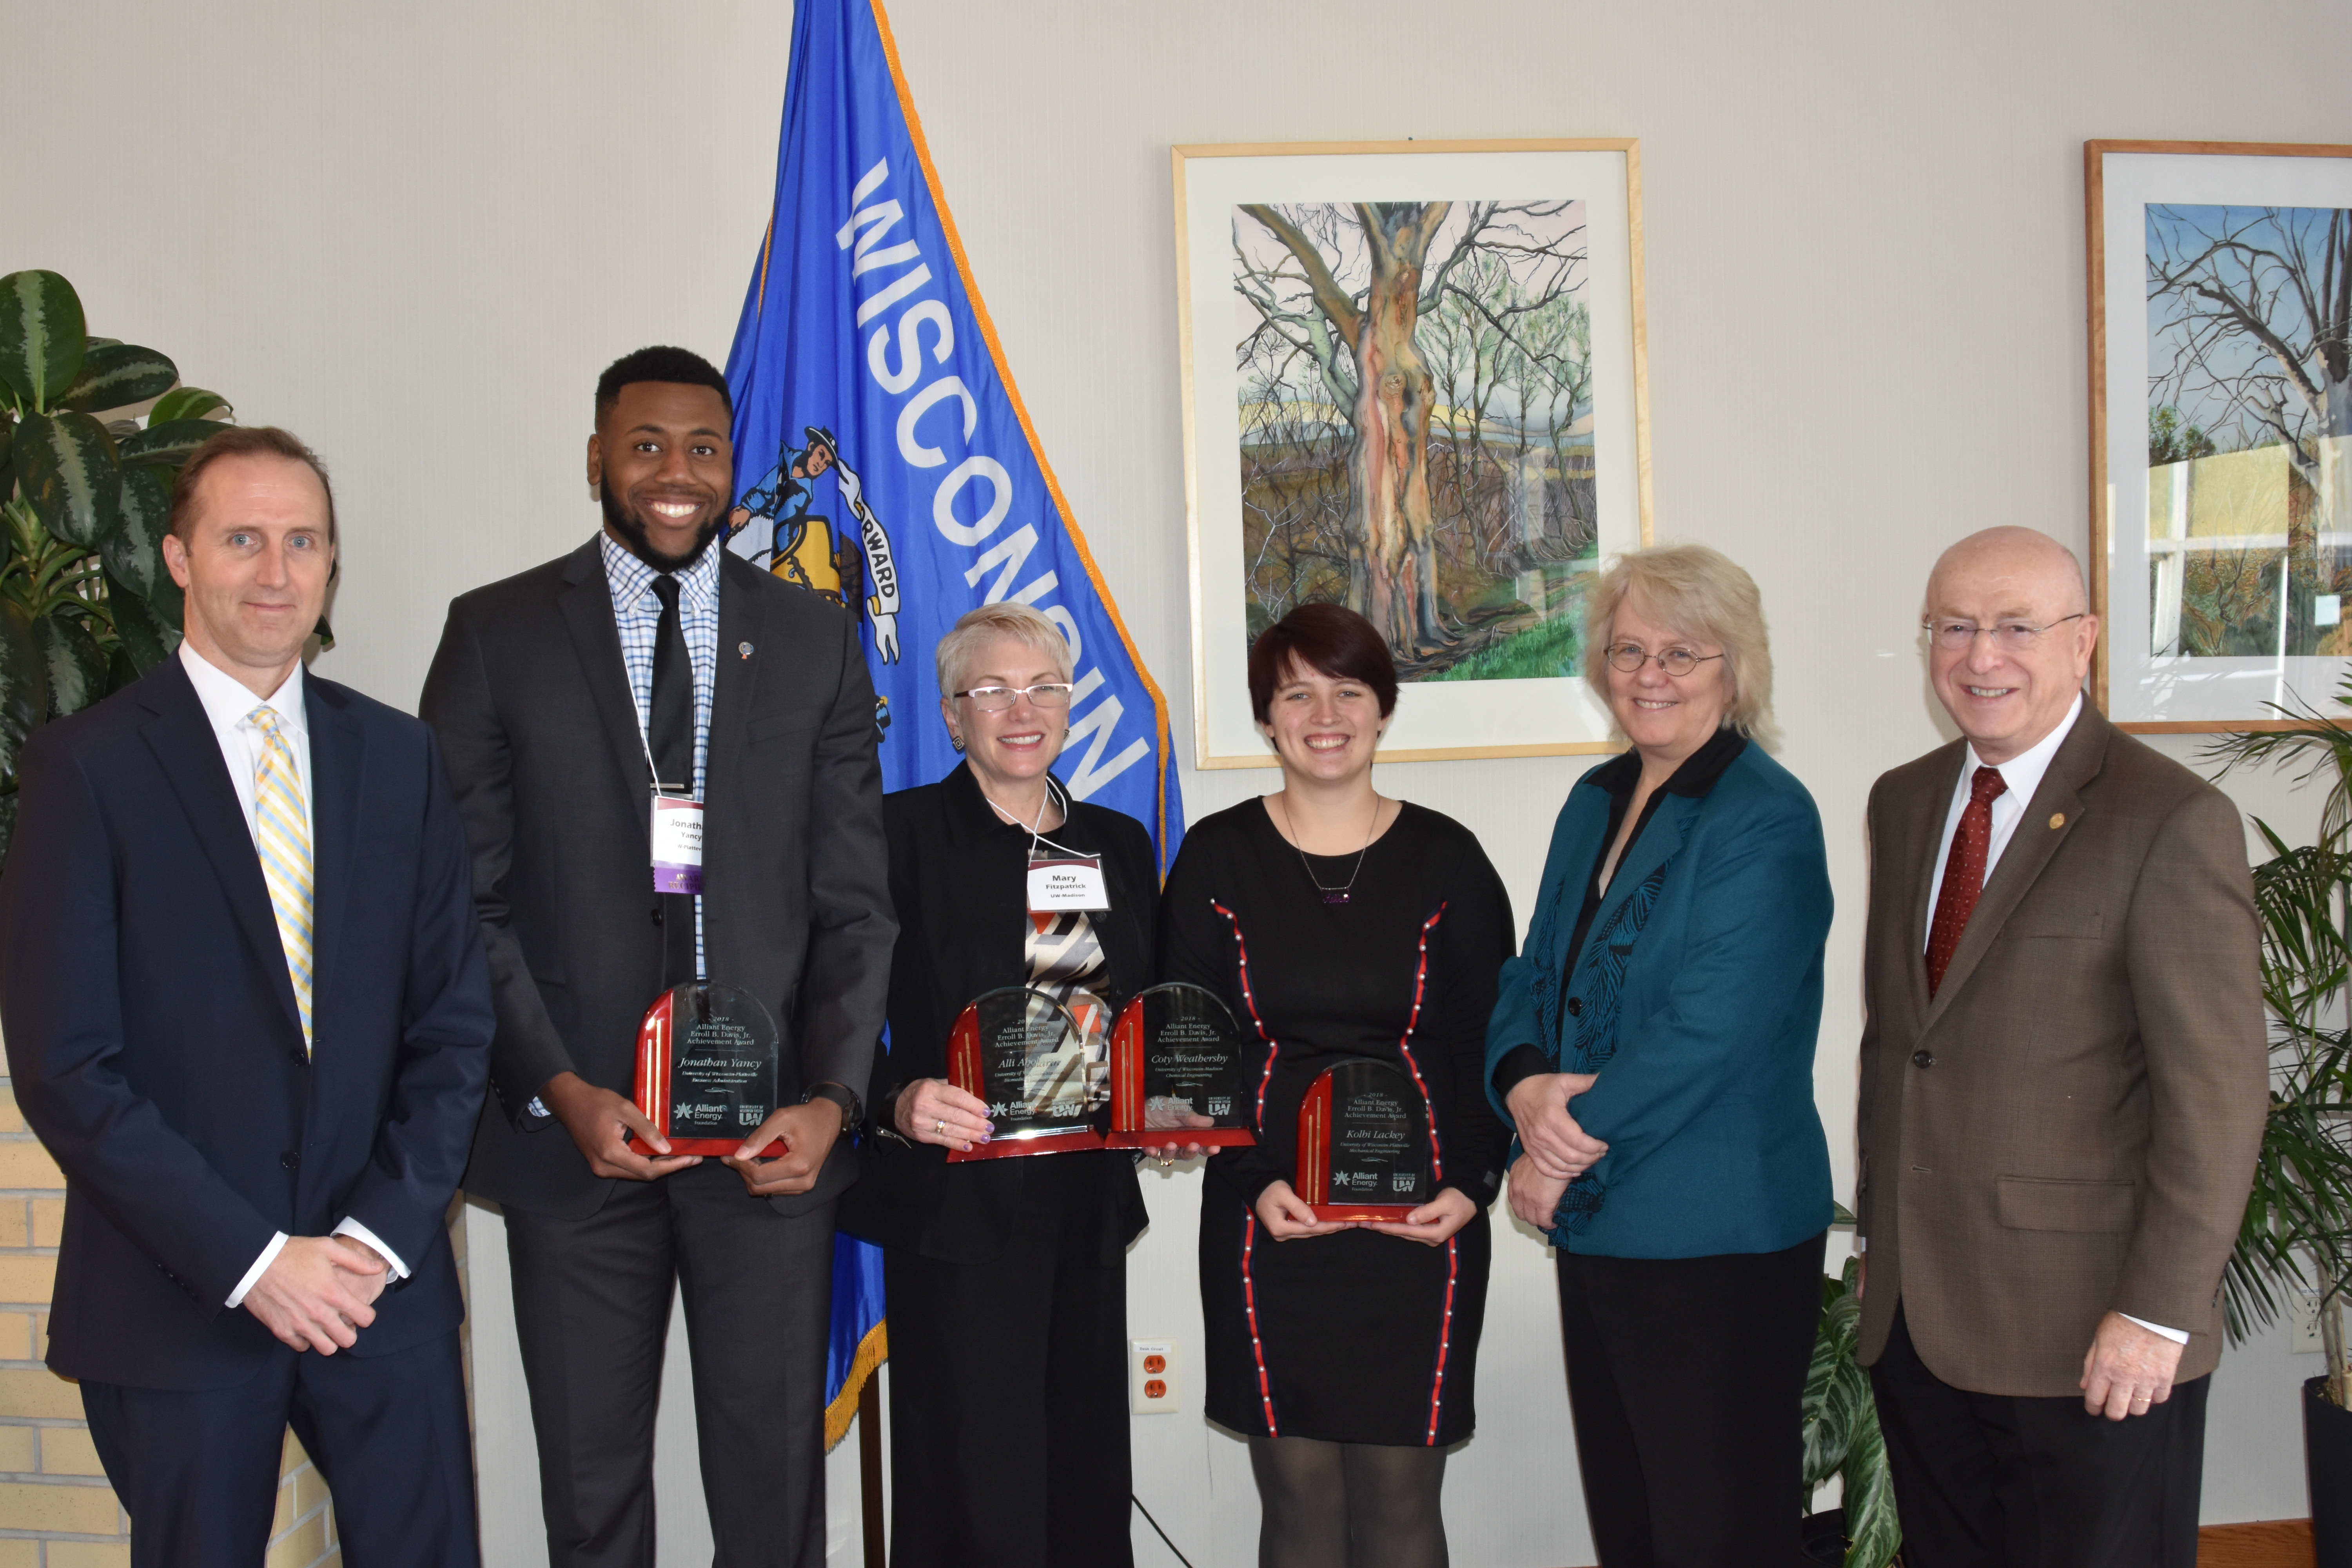 Erroll B. Davis, Jr. Award Recipients; from left: Robert Durian, Jonathan Yancy, Mary Fitzpatrick (Accepting awards for Alli Abolarin and Coty Weathersby), Kolbi Lackey, Karen Schmitt, Ray Cross